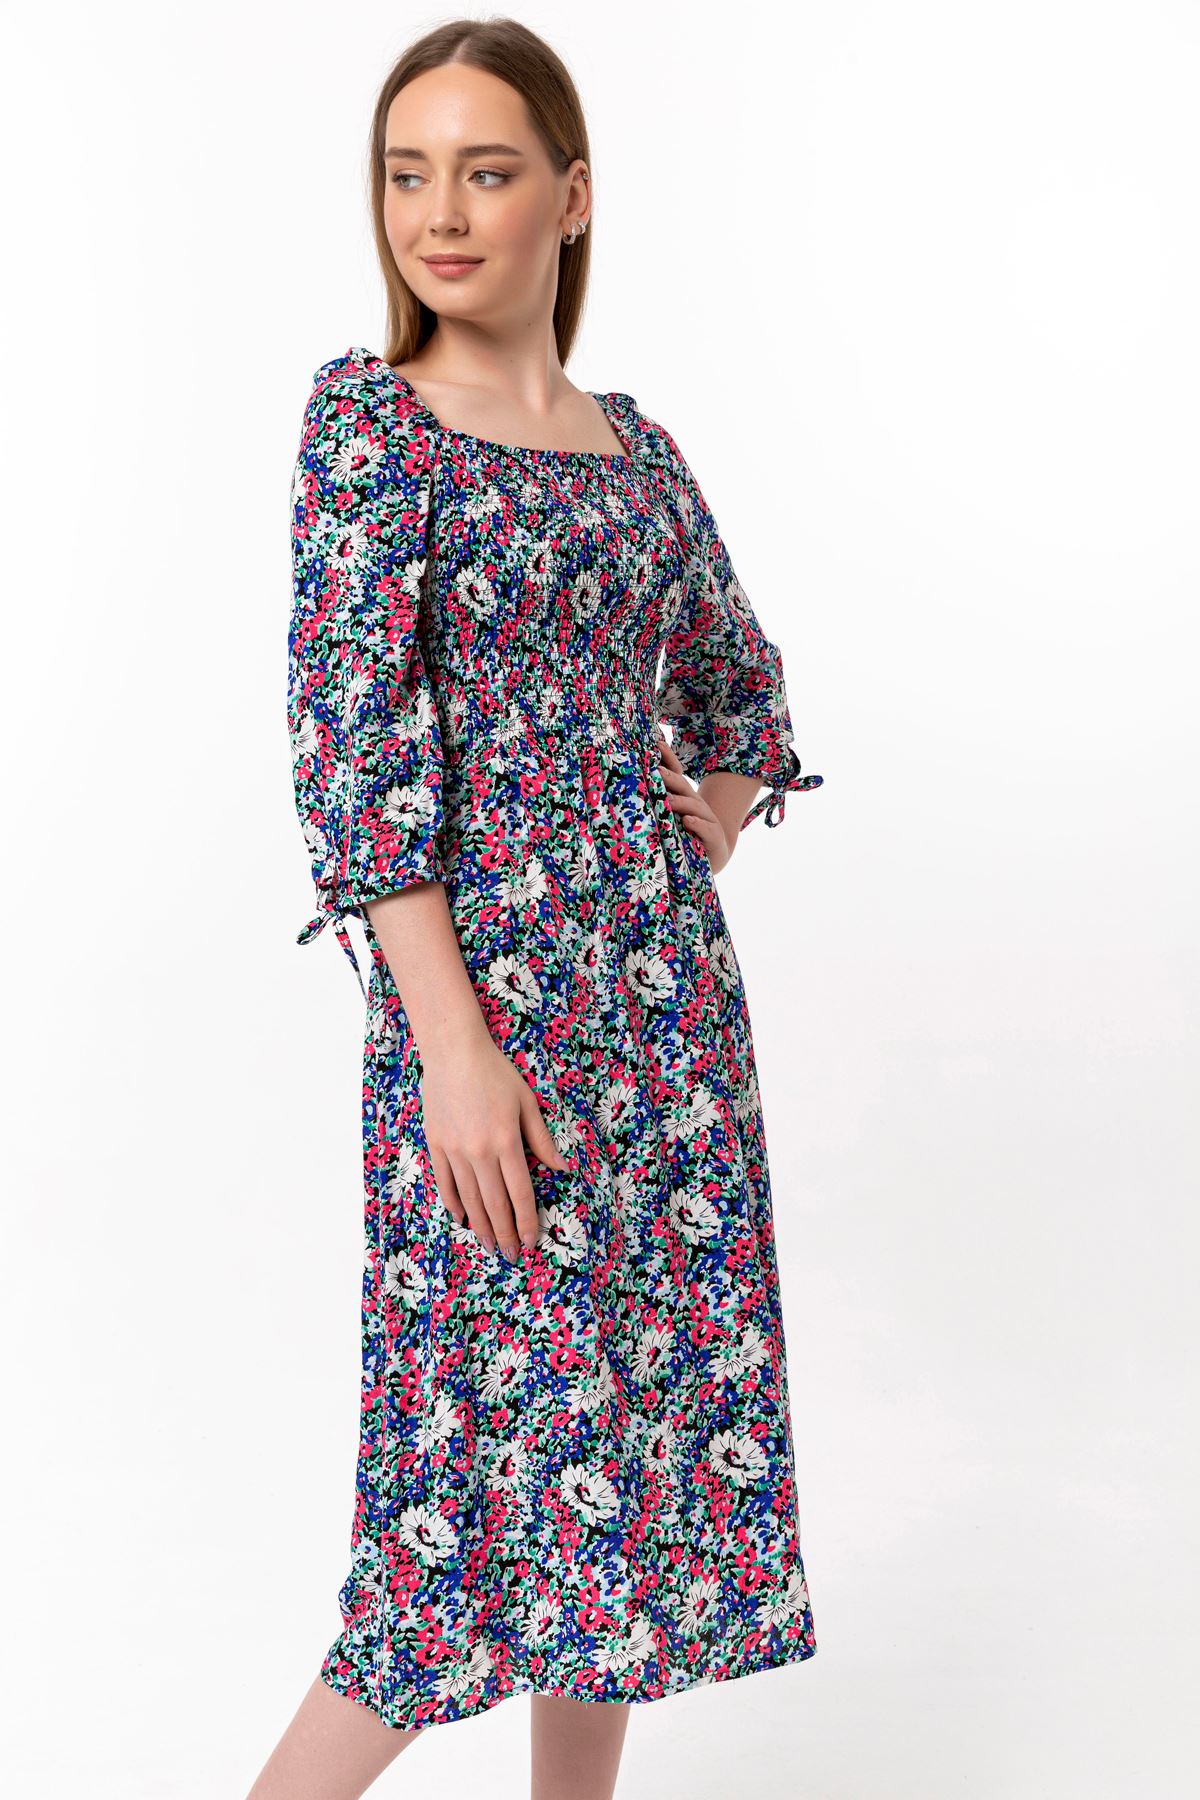 Viscose Fabric Square Neckline Midi Floral Print Women Dress - Blue